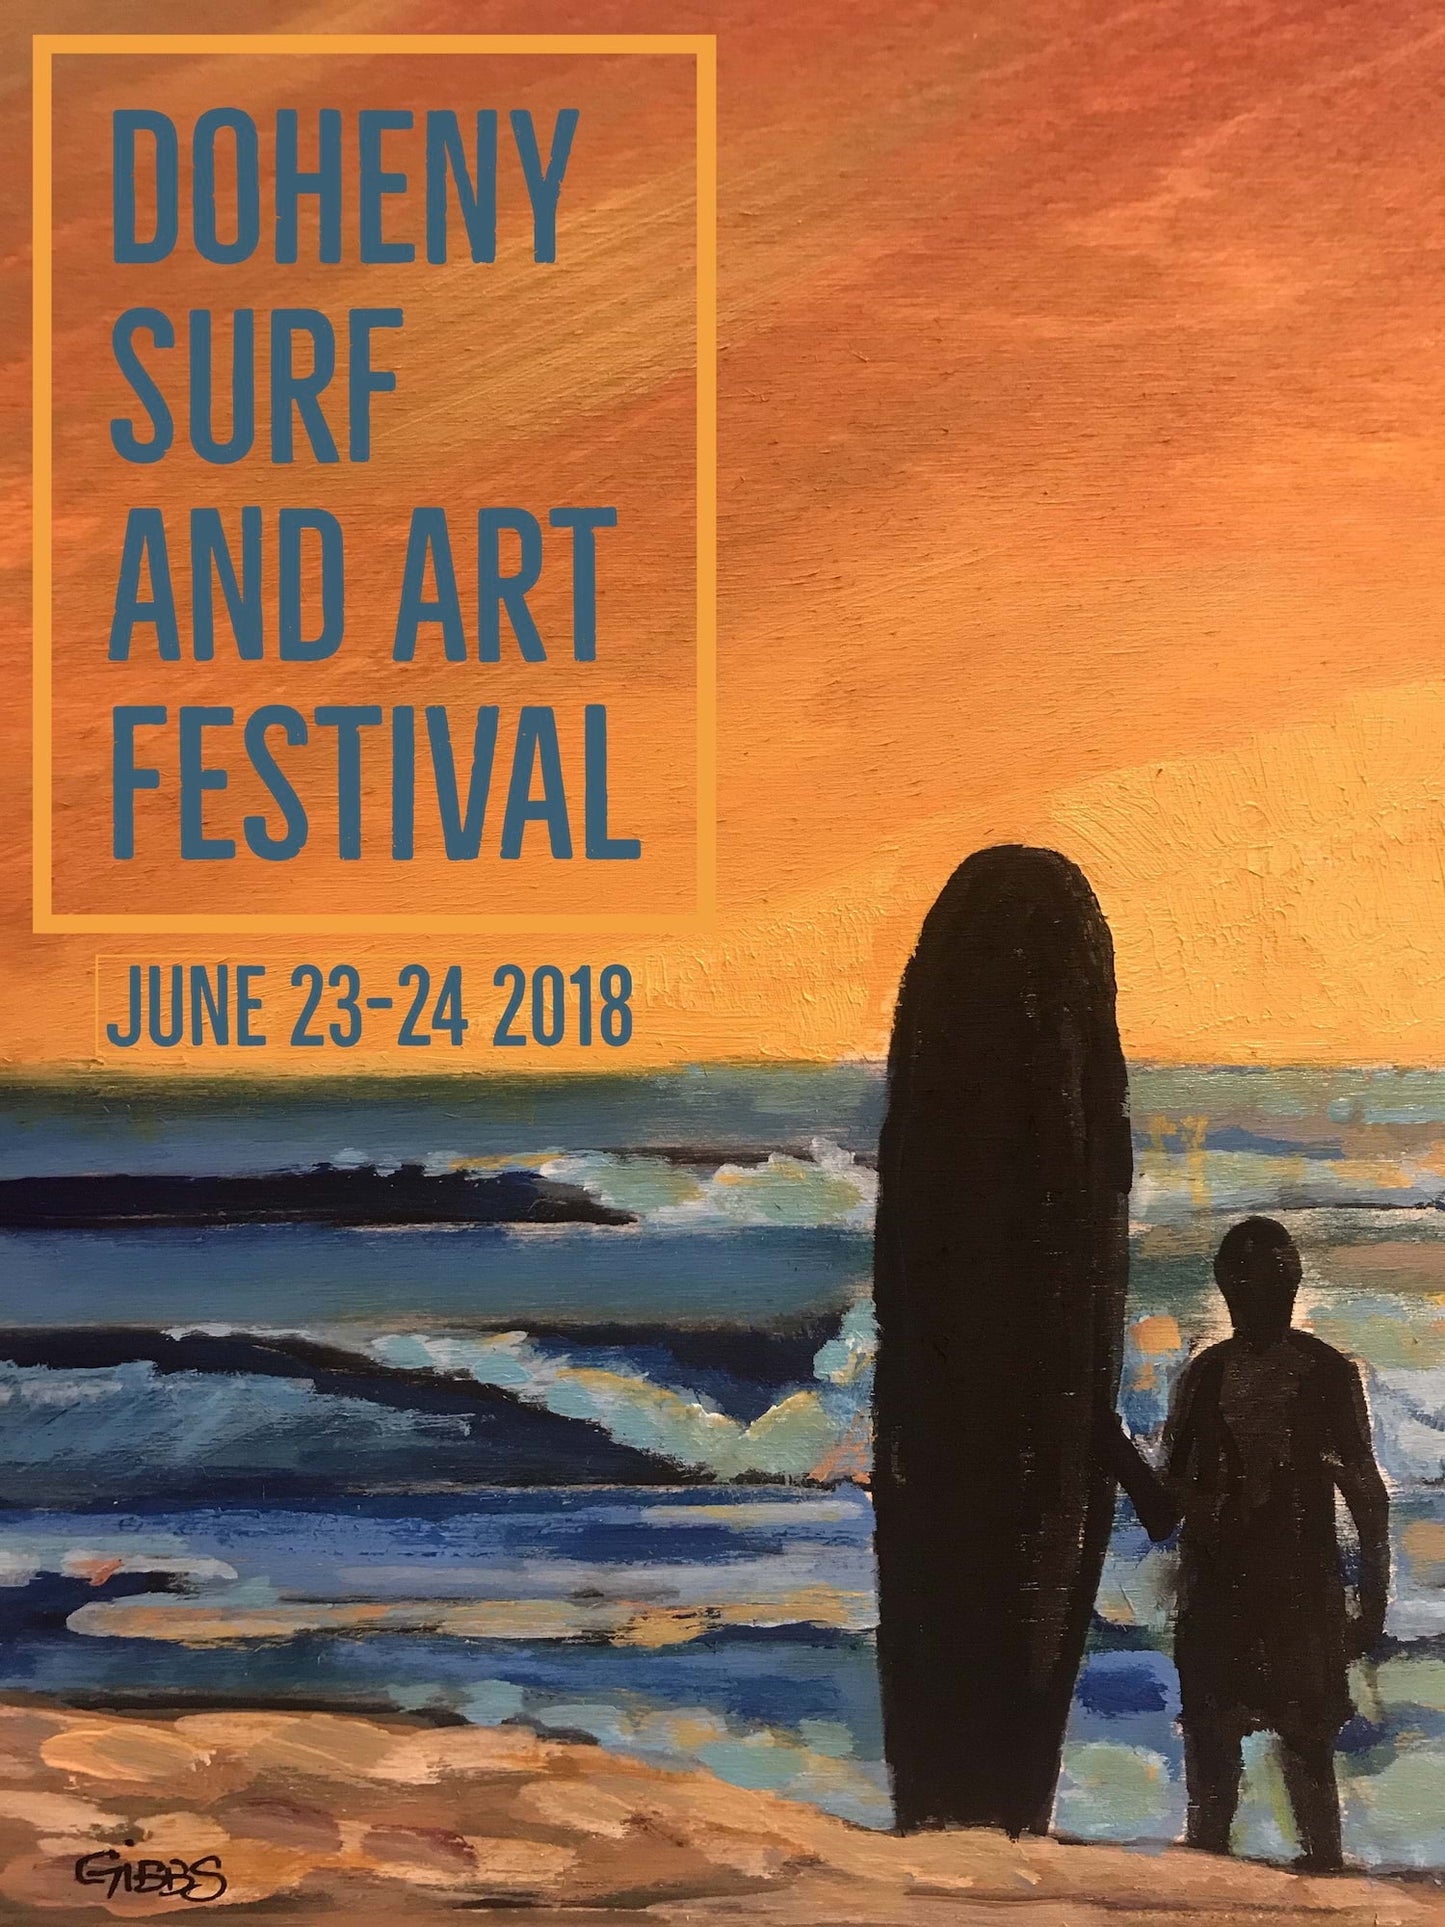 Doheny Surf Fest Poster 2018